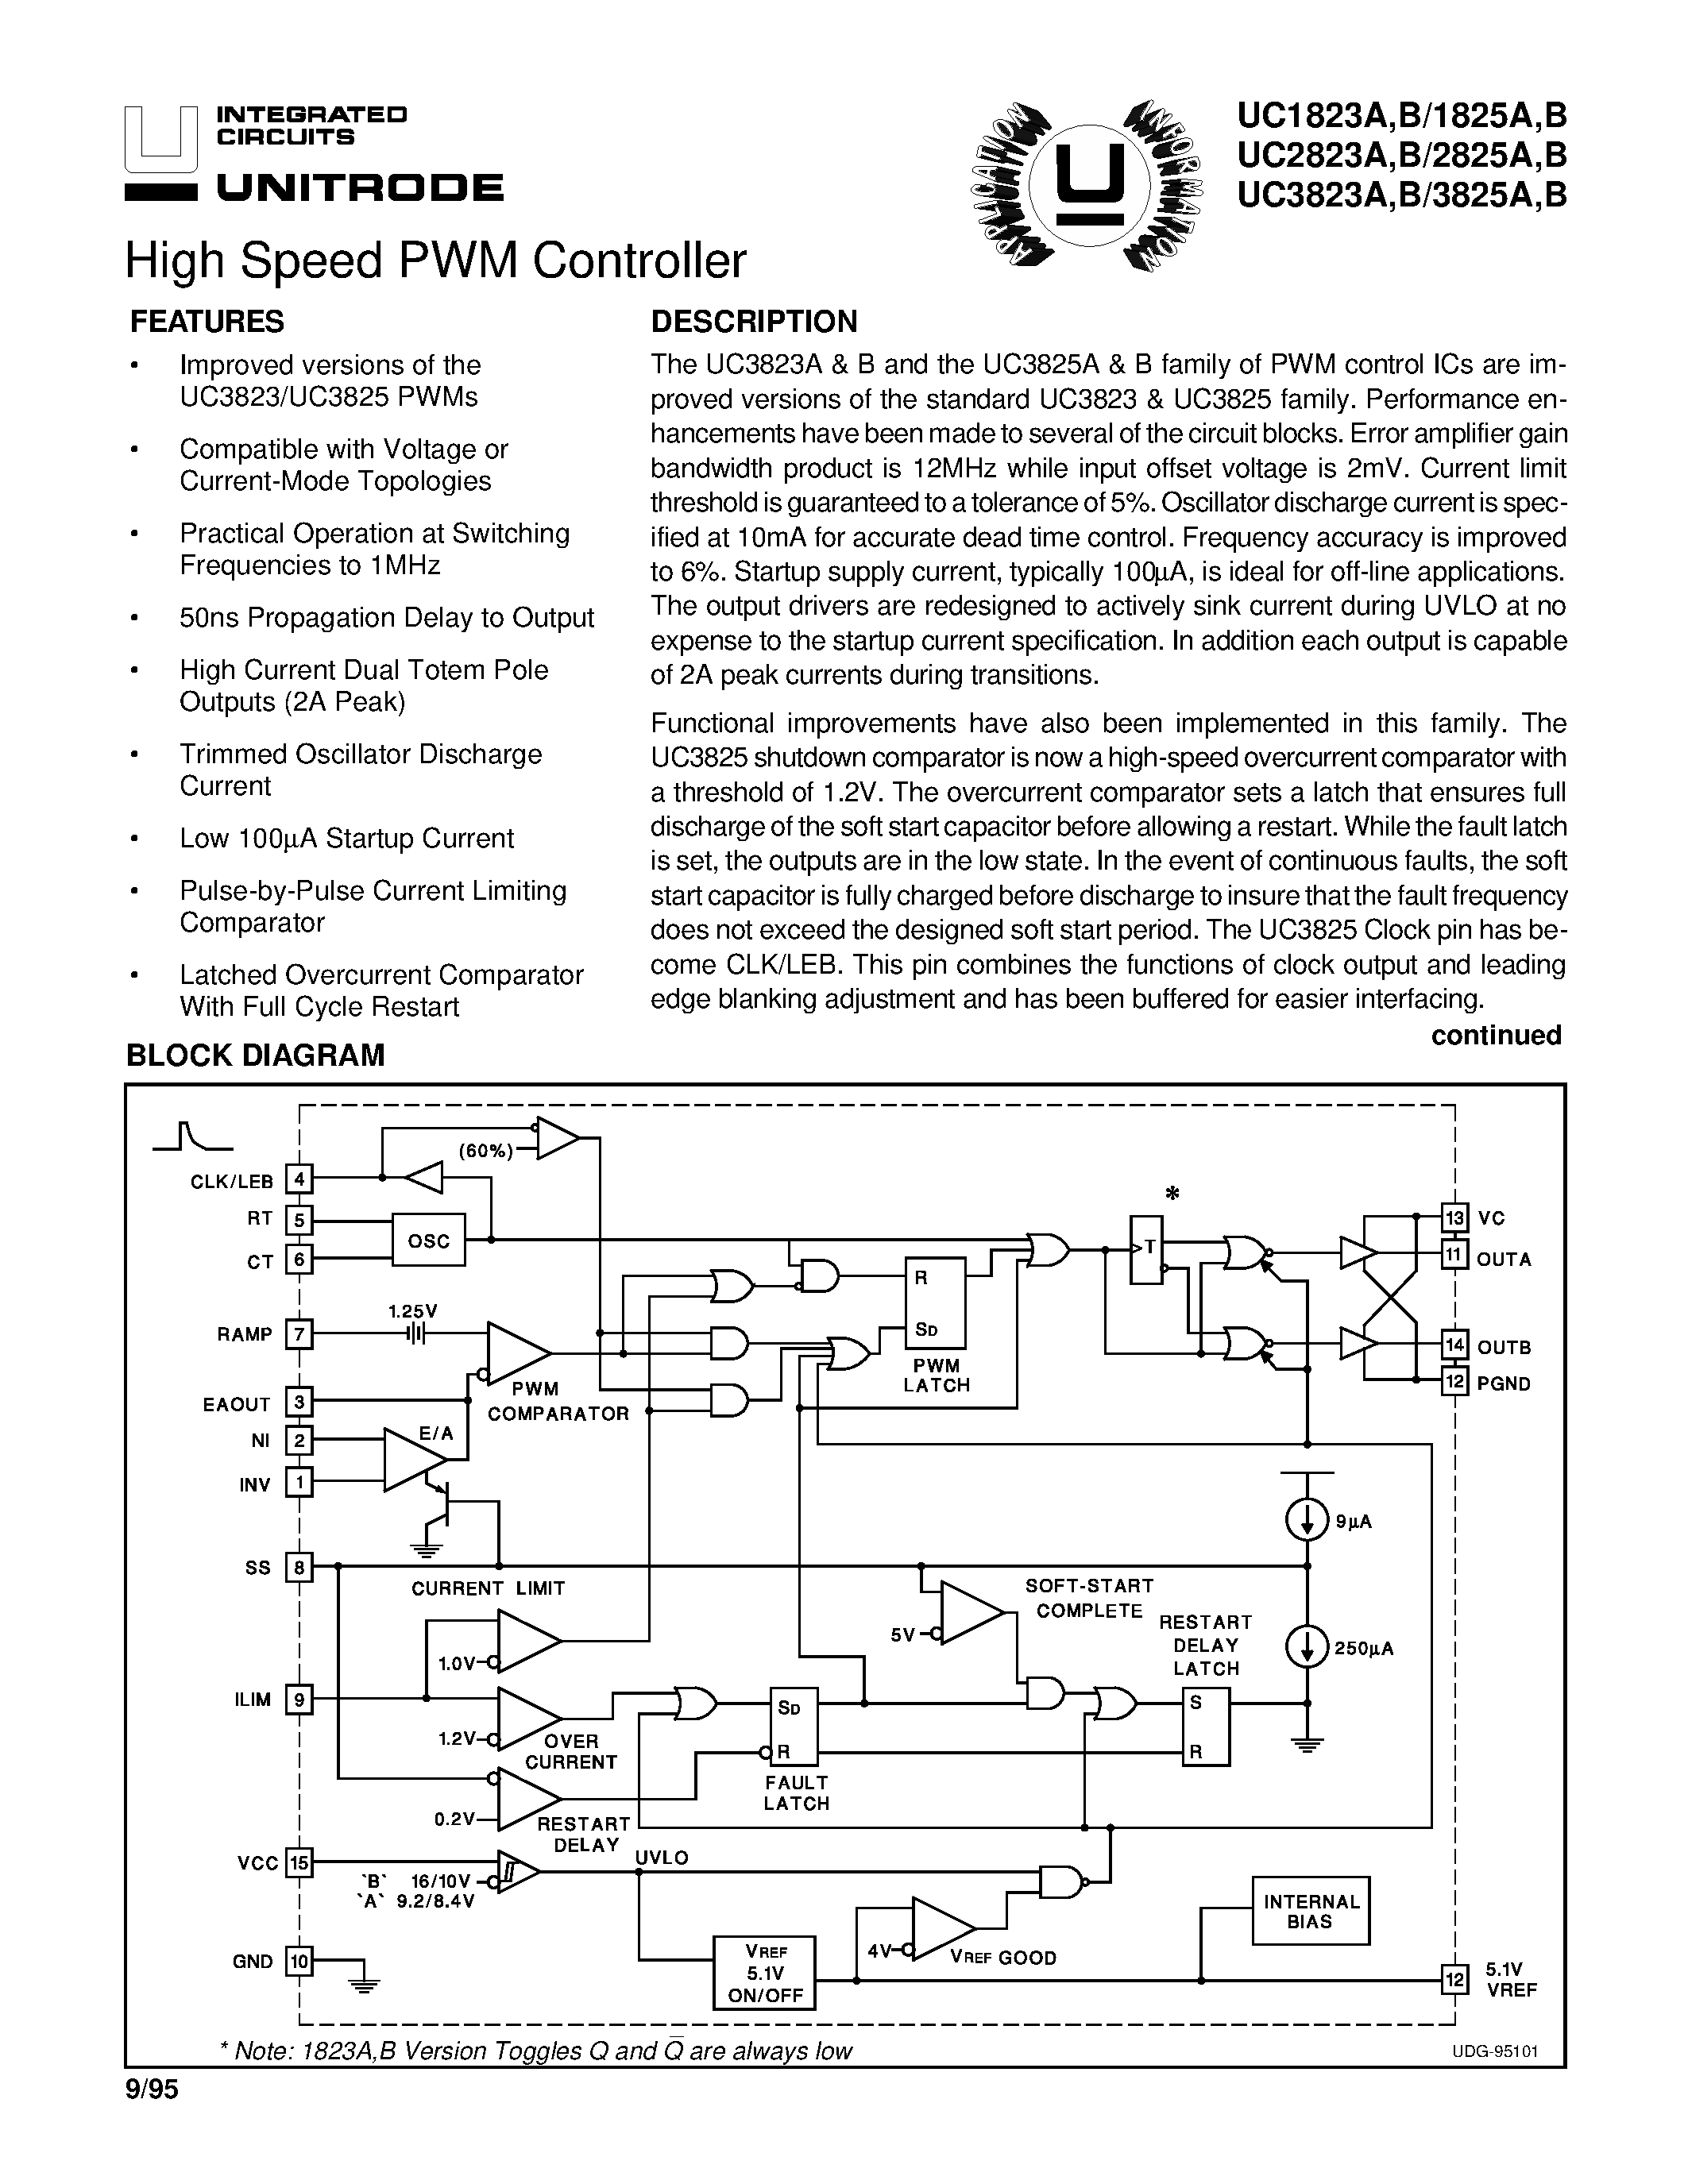 Datasheet UC2823B - High Speed PWM Controller page 1